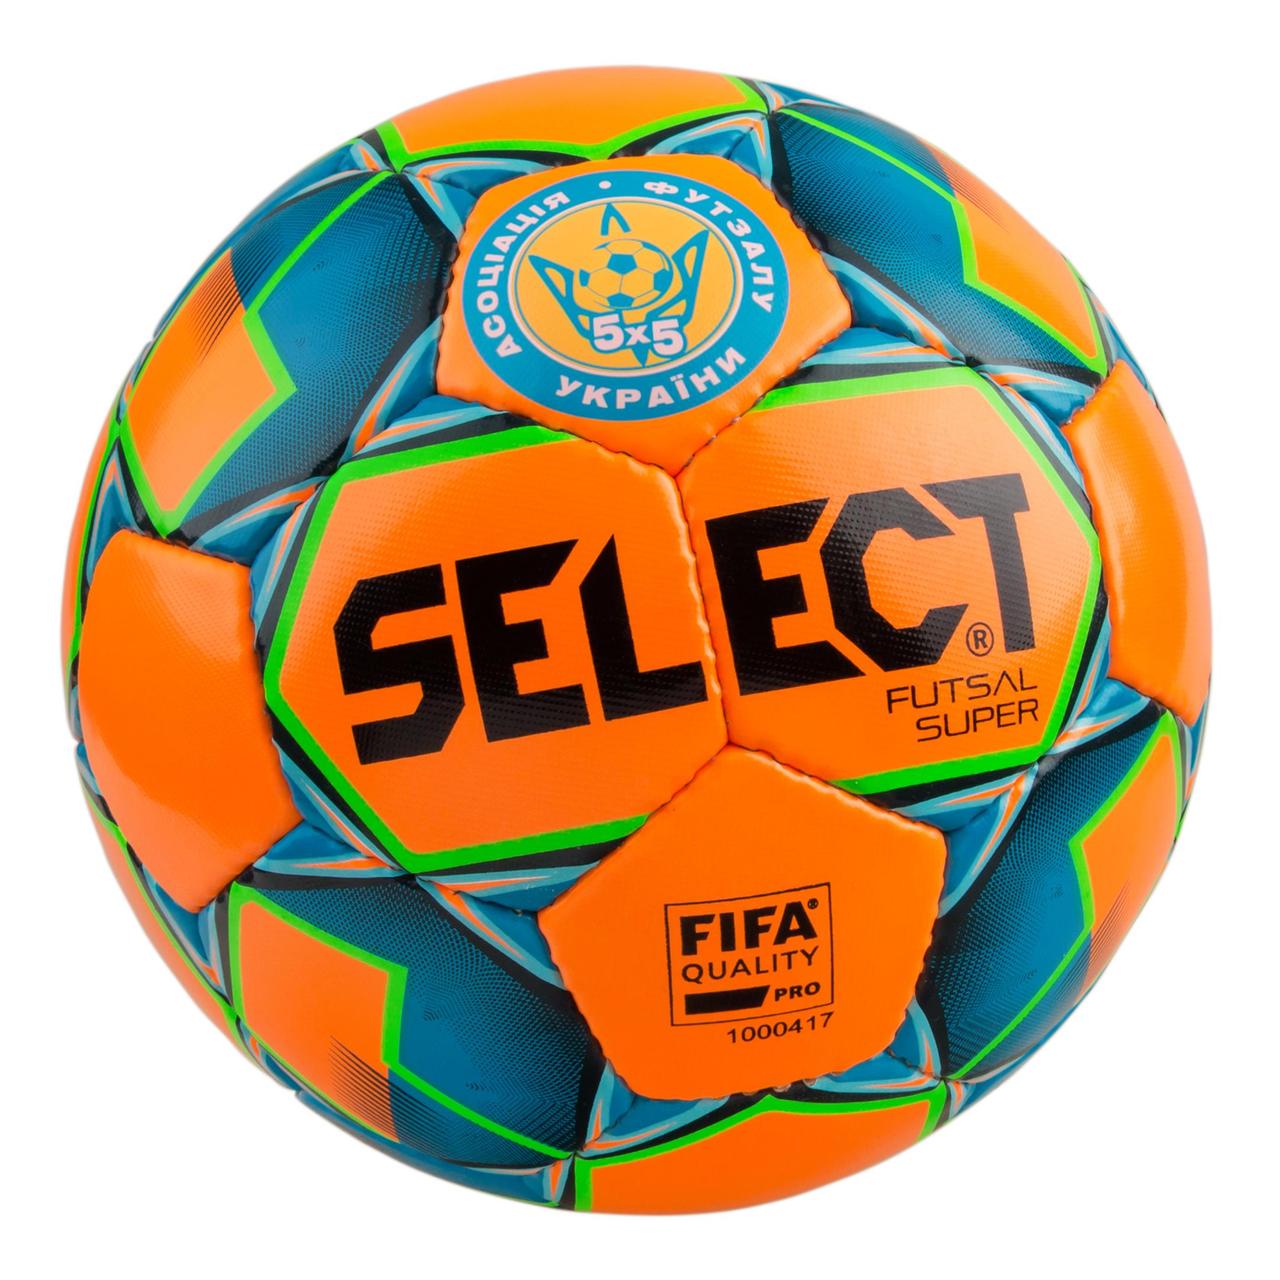 Futsal Super FIFA Quality PRO - перевірено професійними лігами!